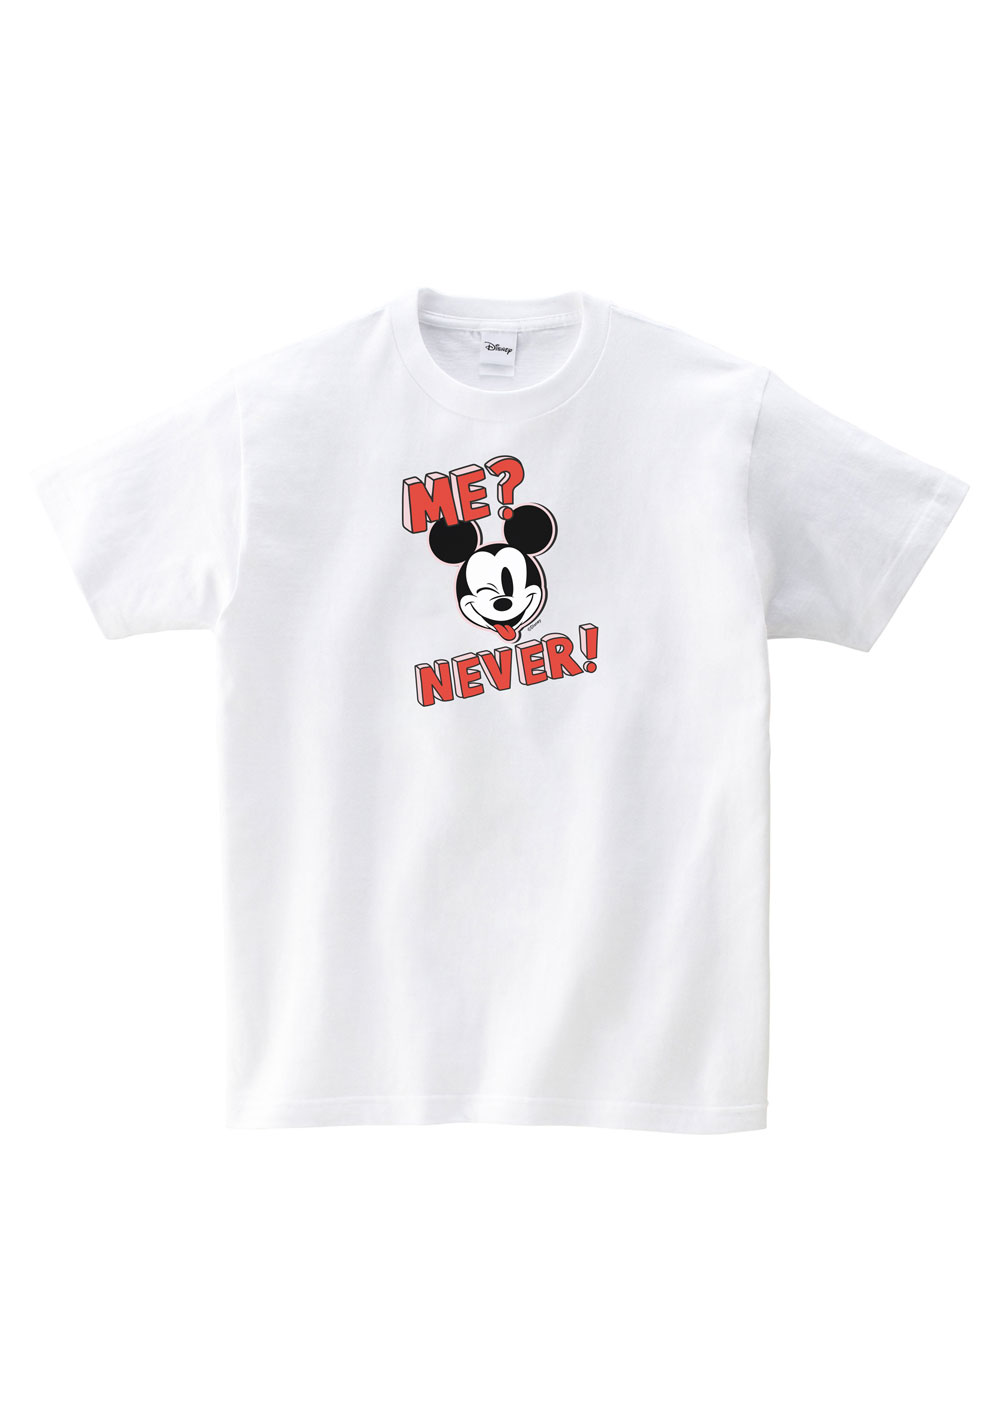 Never Mickey (White)